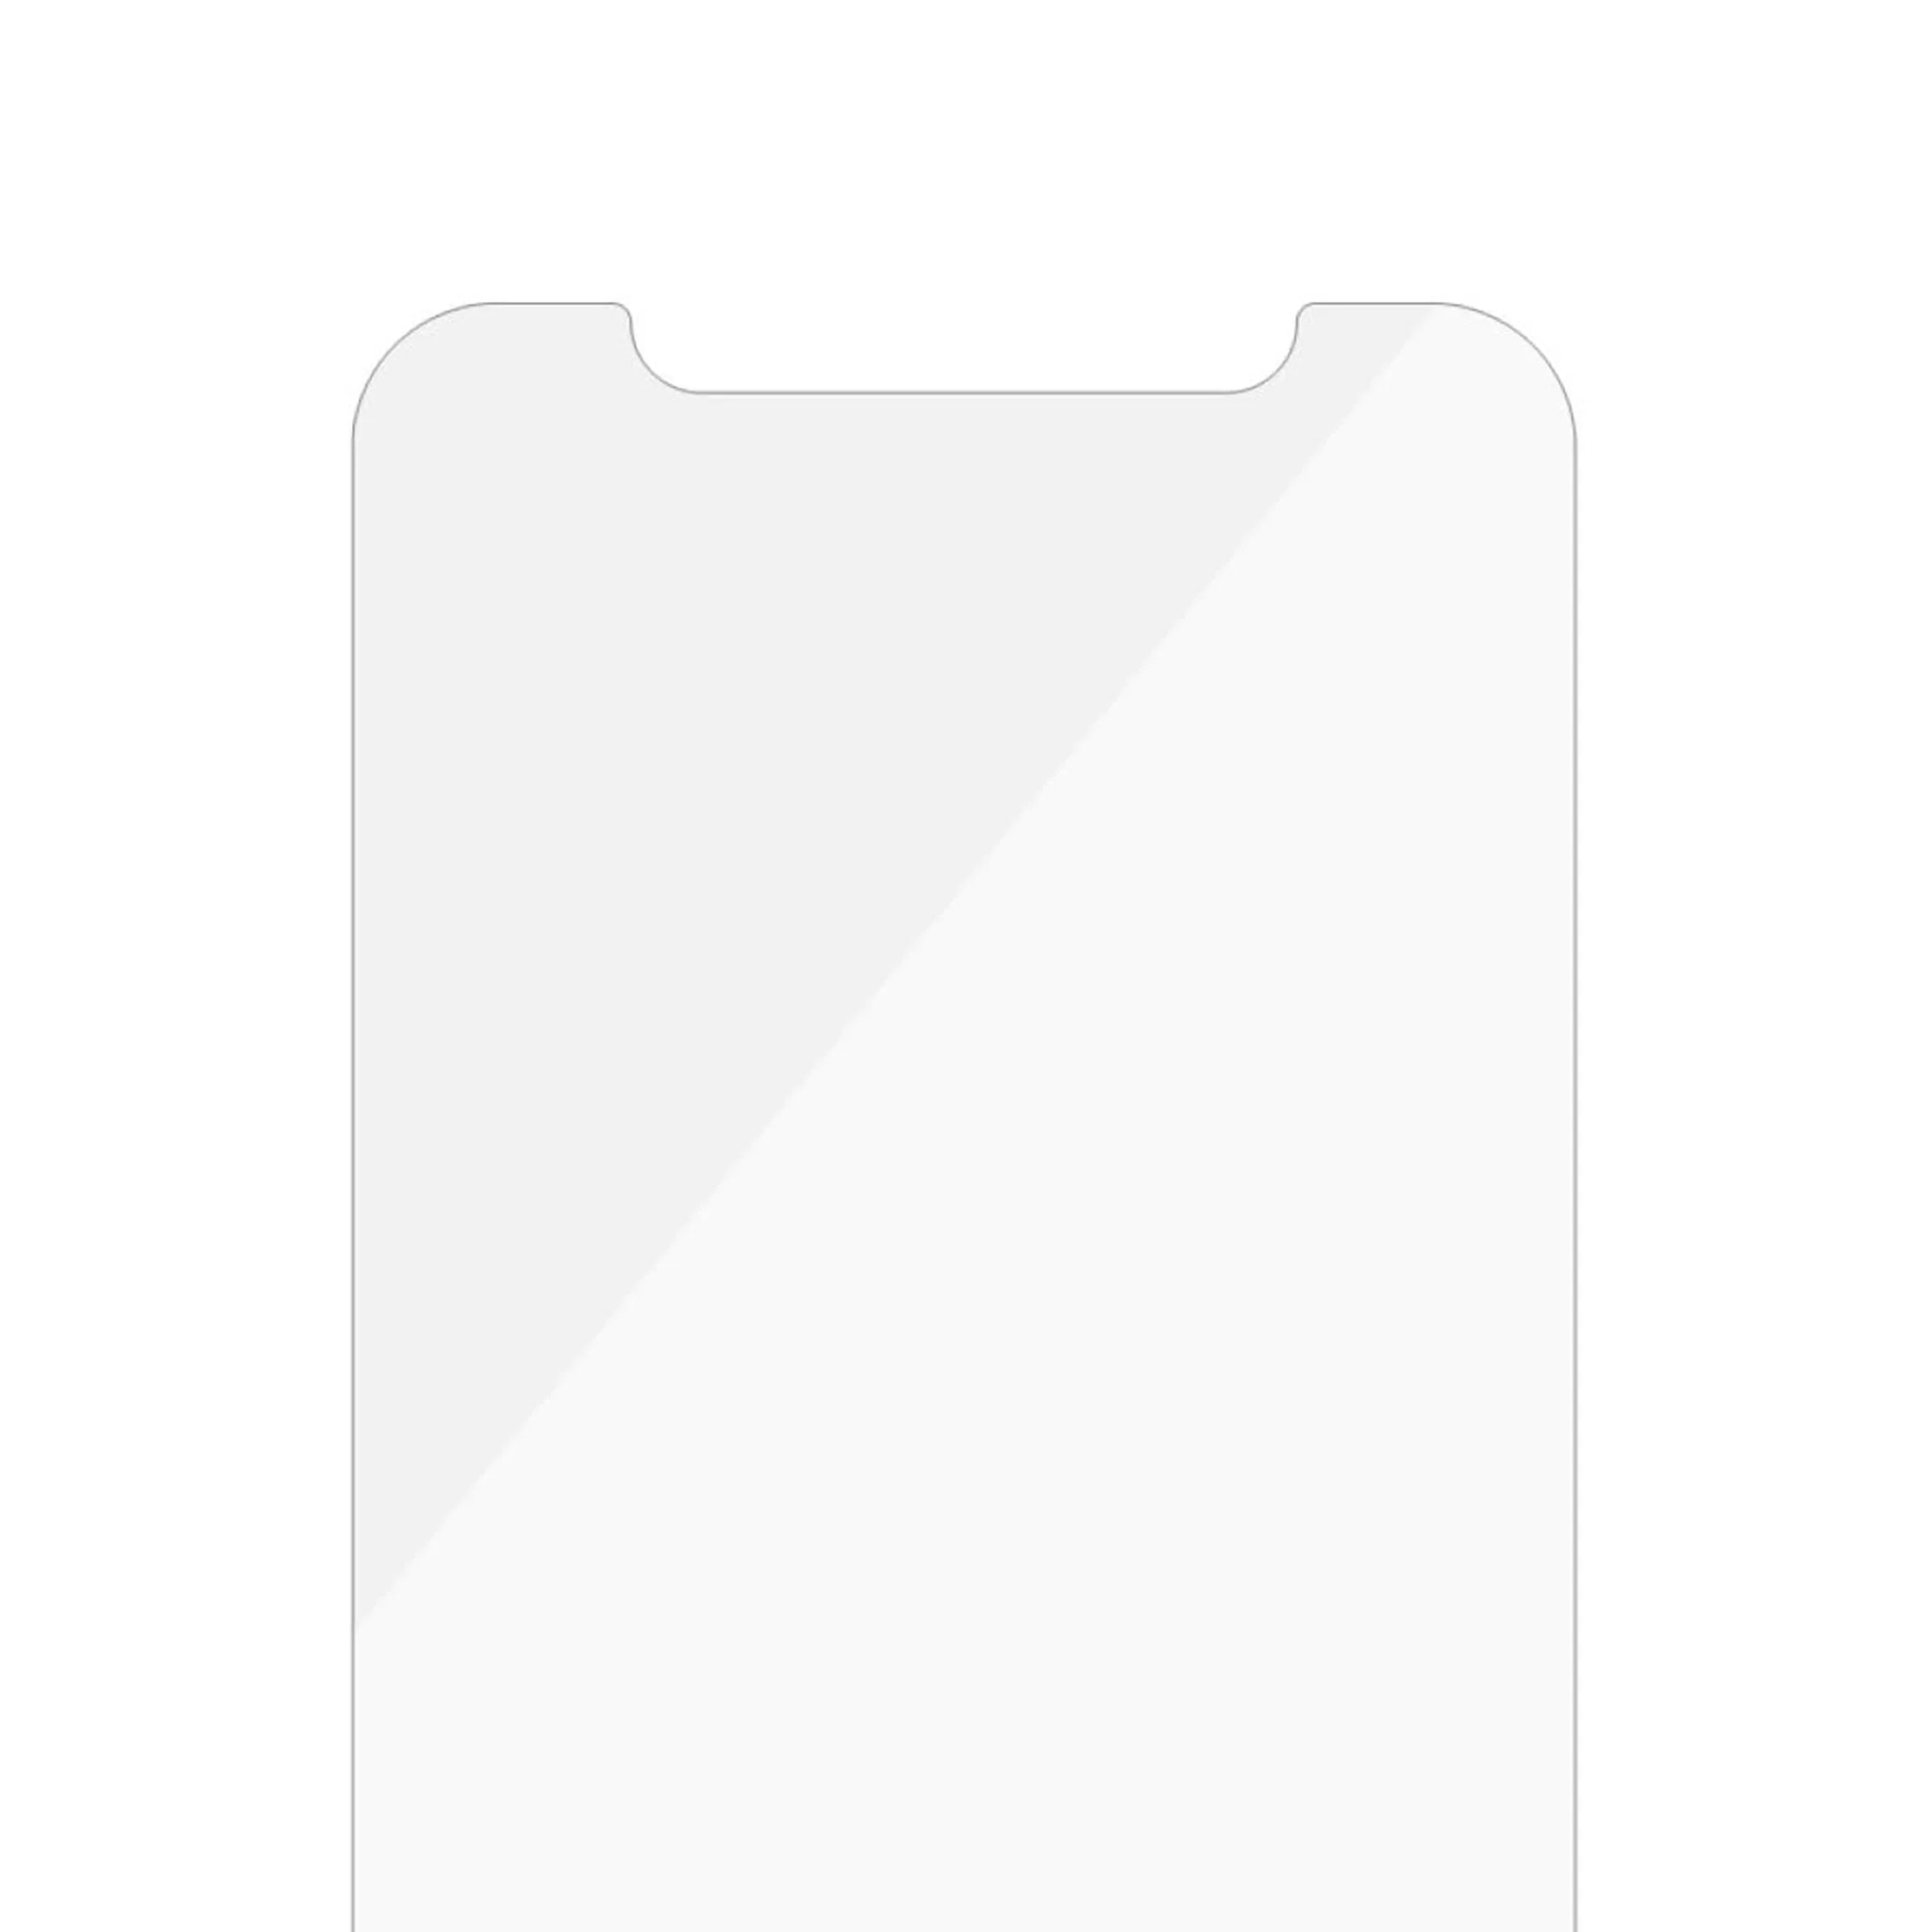 iPhone X/XS/11 Pro Screen Protector